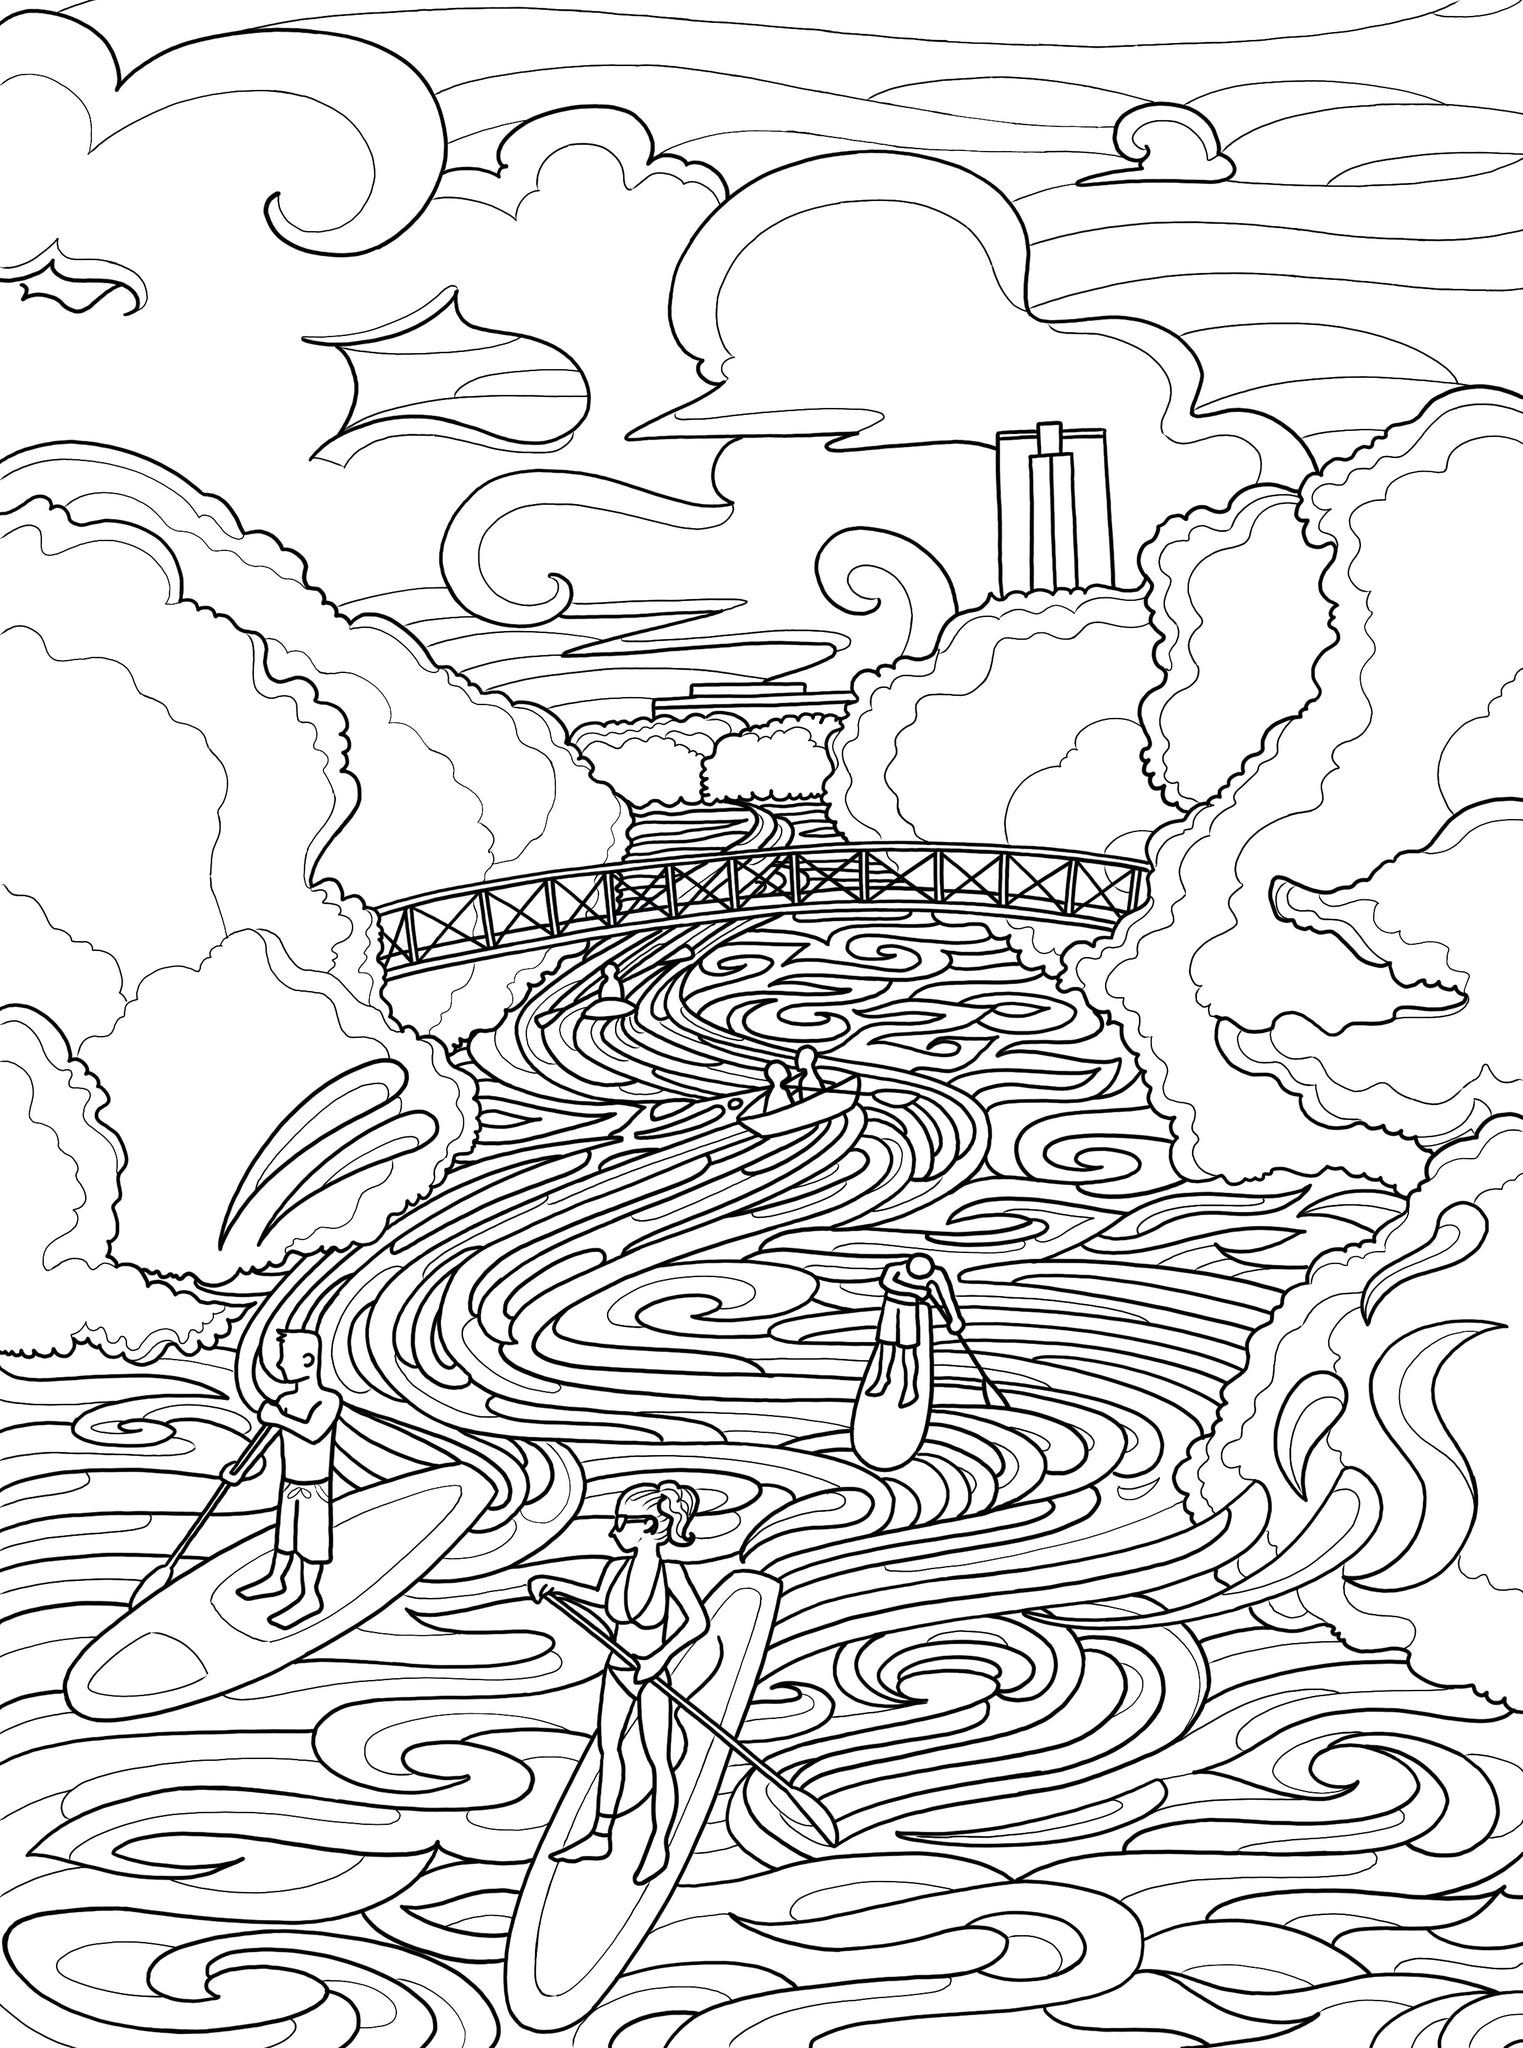 Lou Neff Paddleboard Coloring Page - Borrelli Illustrations